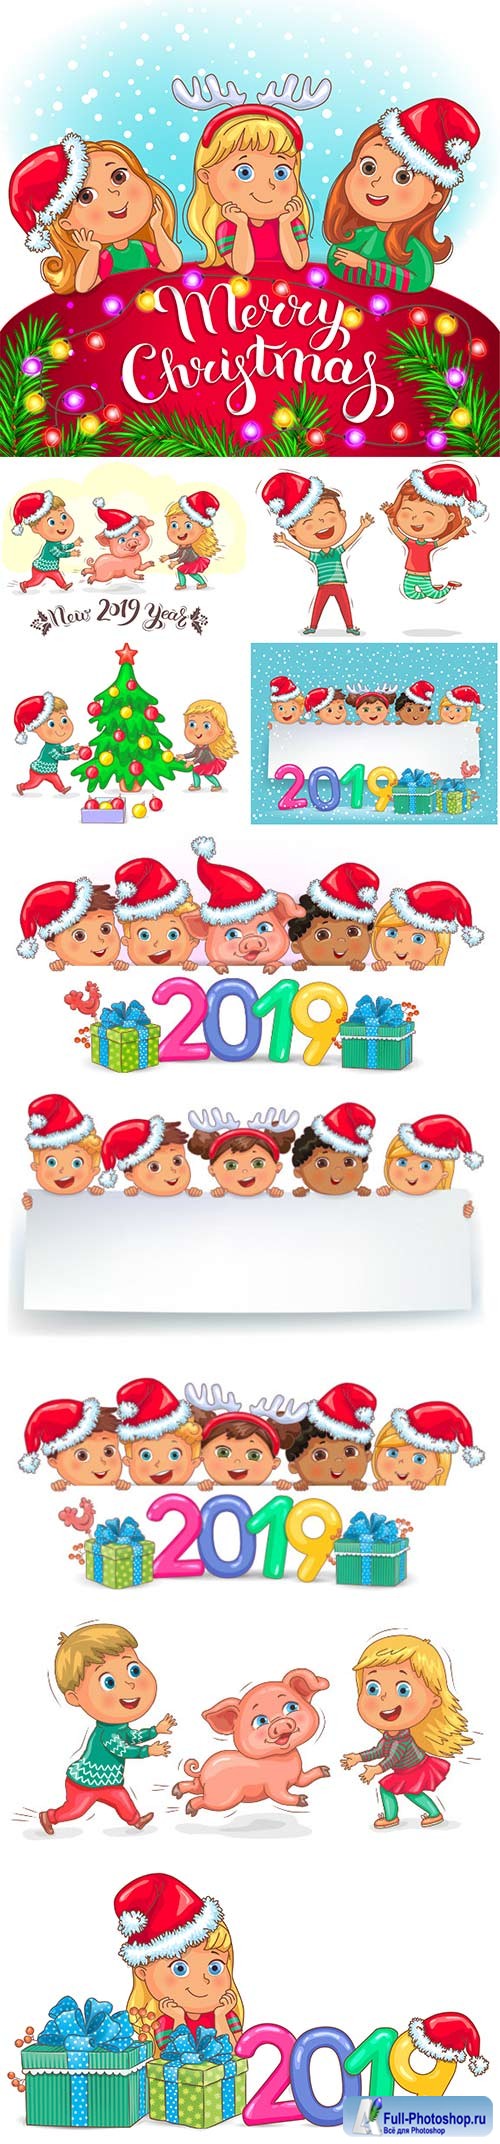 Cute kids and little piggy new year 2019